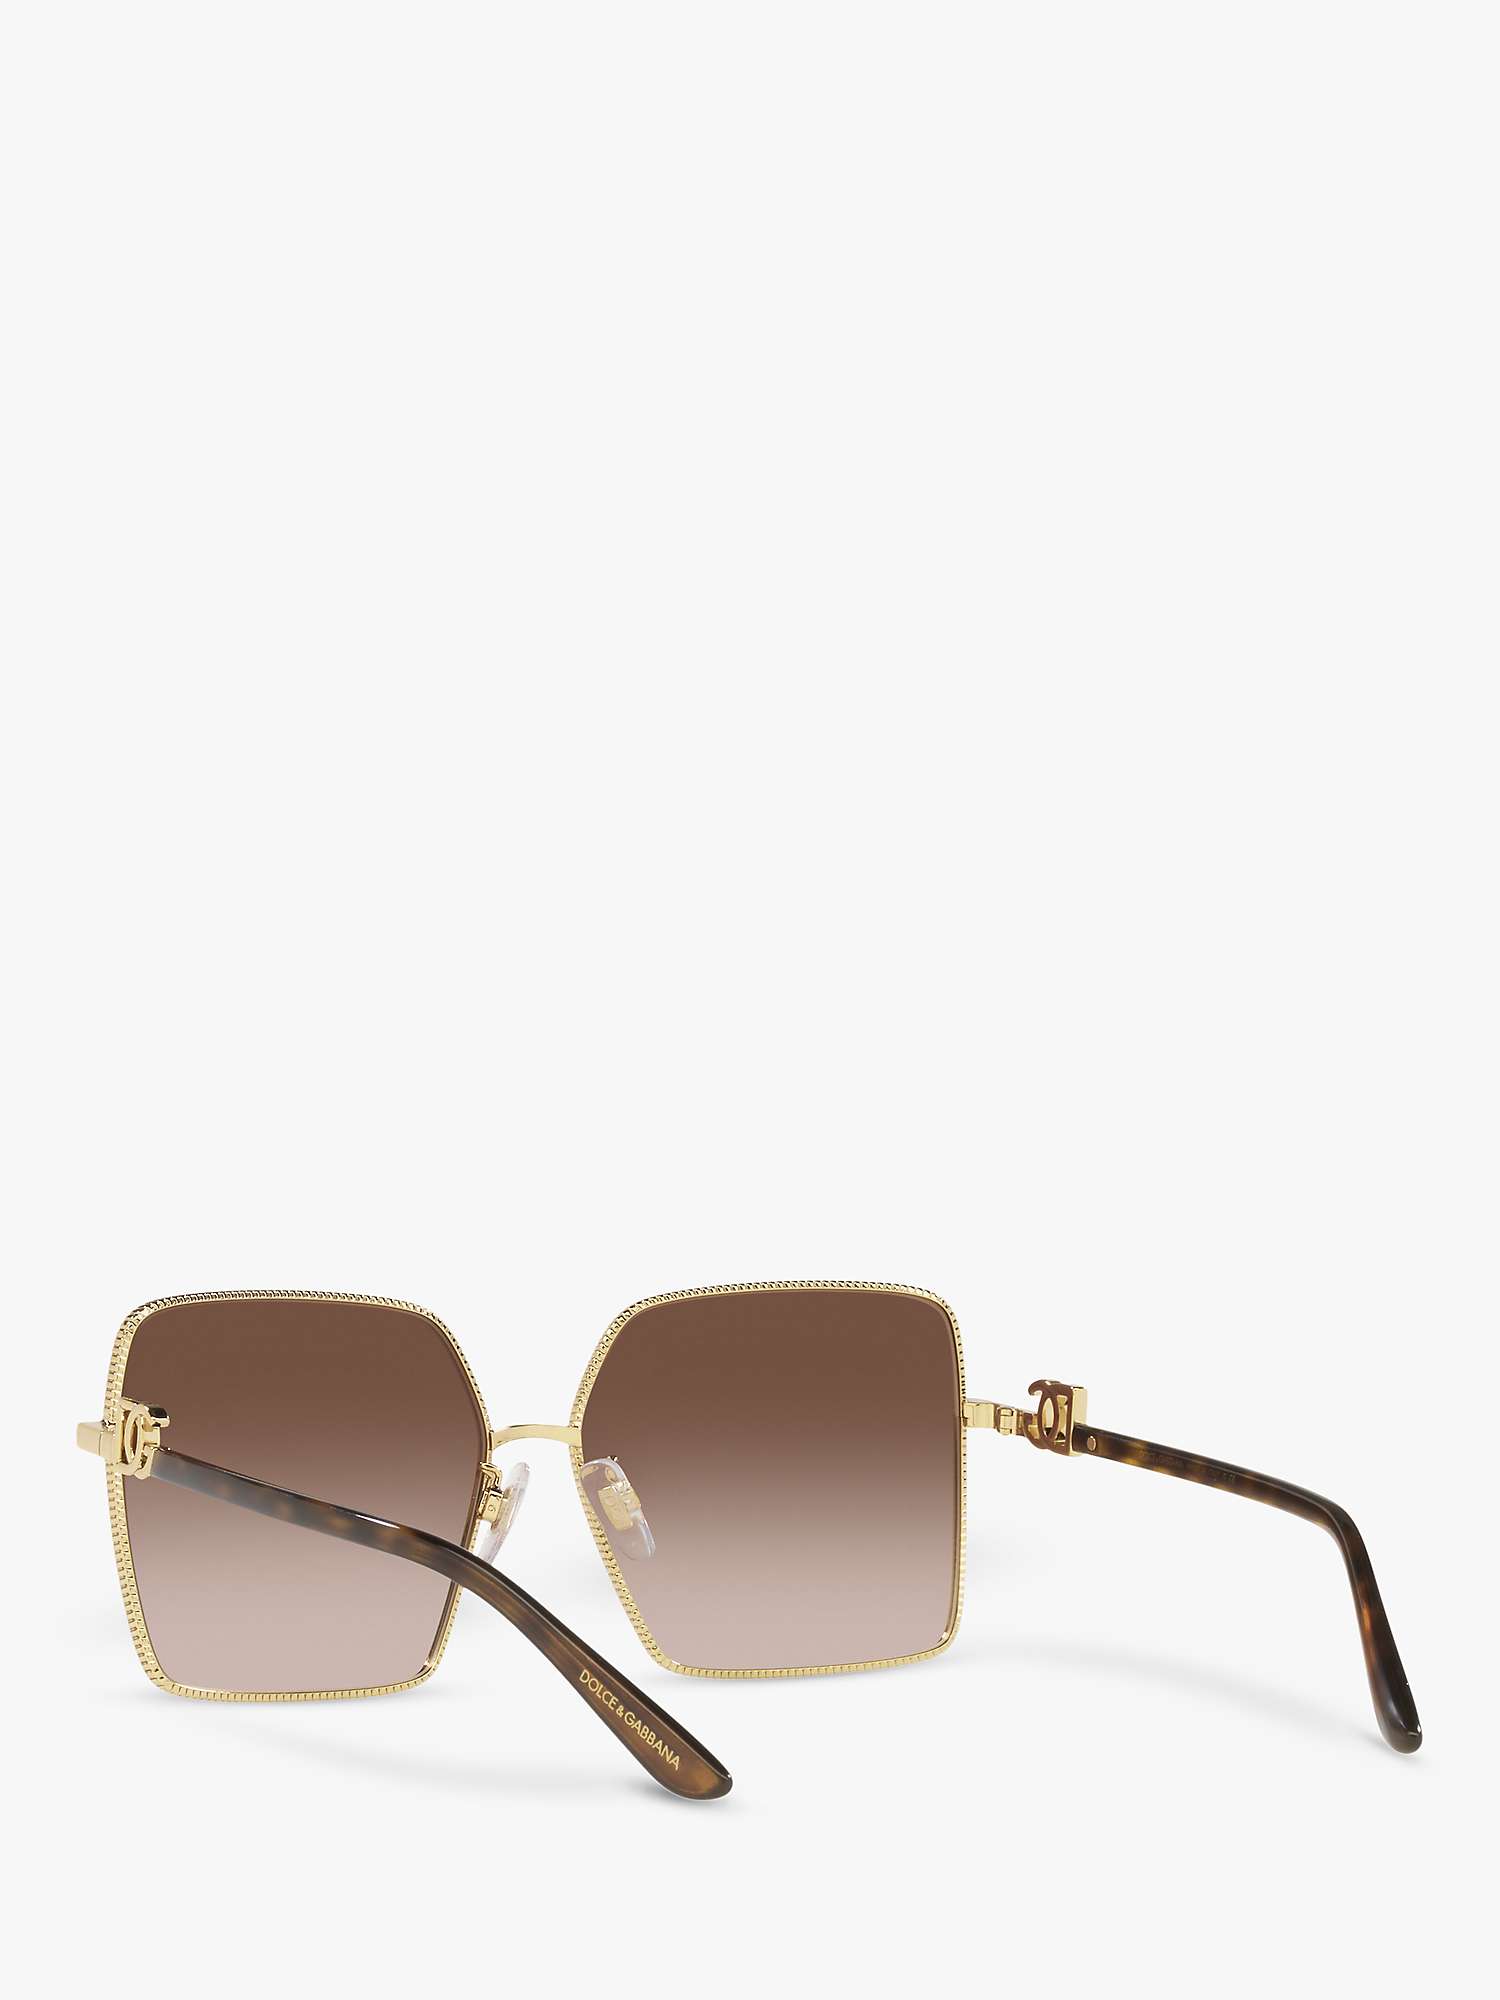 Buy Dolce & Gabbana DG227902 Women's Square Sunglasses, Gold Online at johnlewis.com